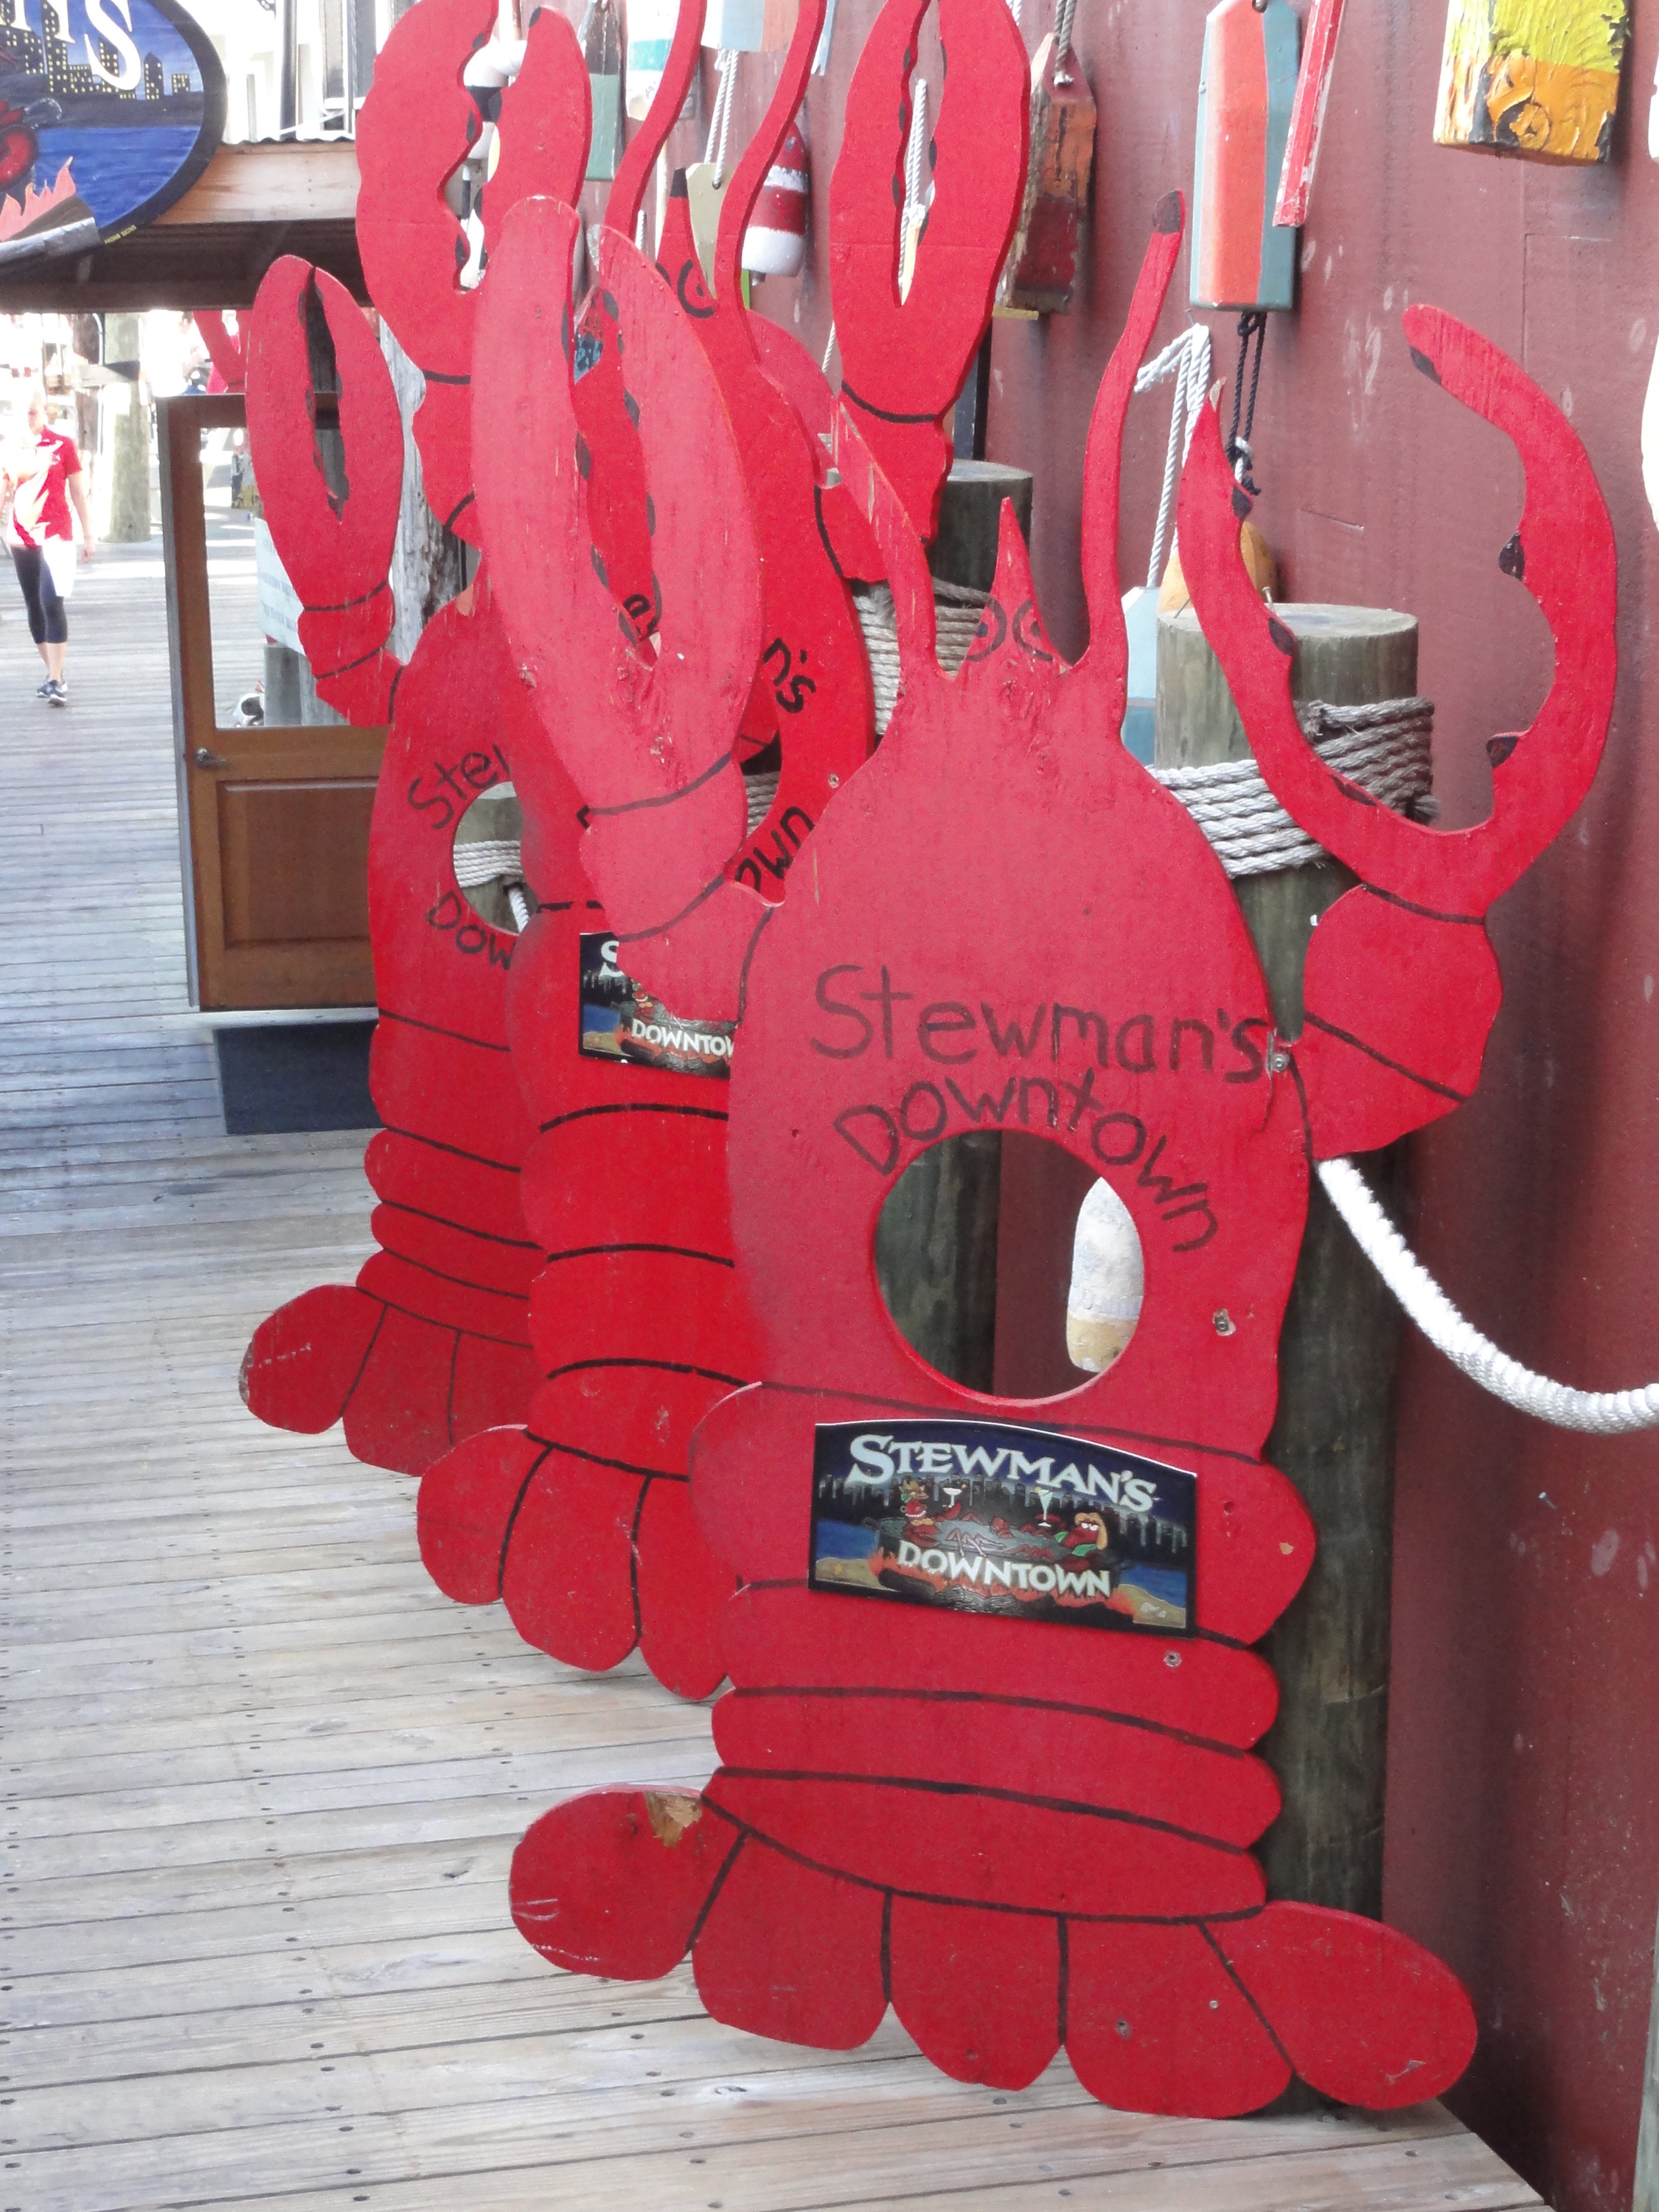 Lobster Restaurant in Bar Harbour